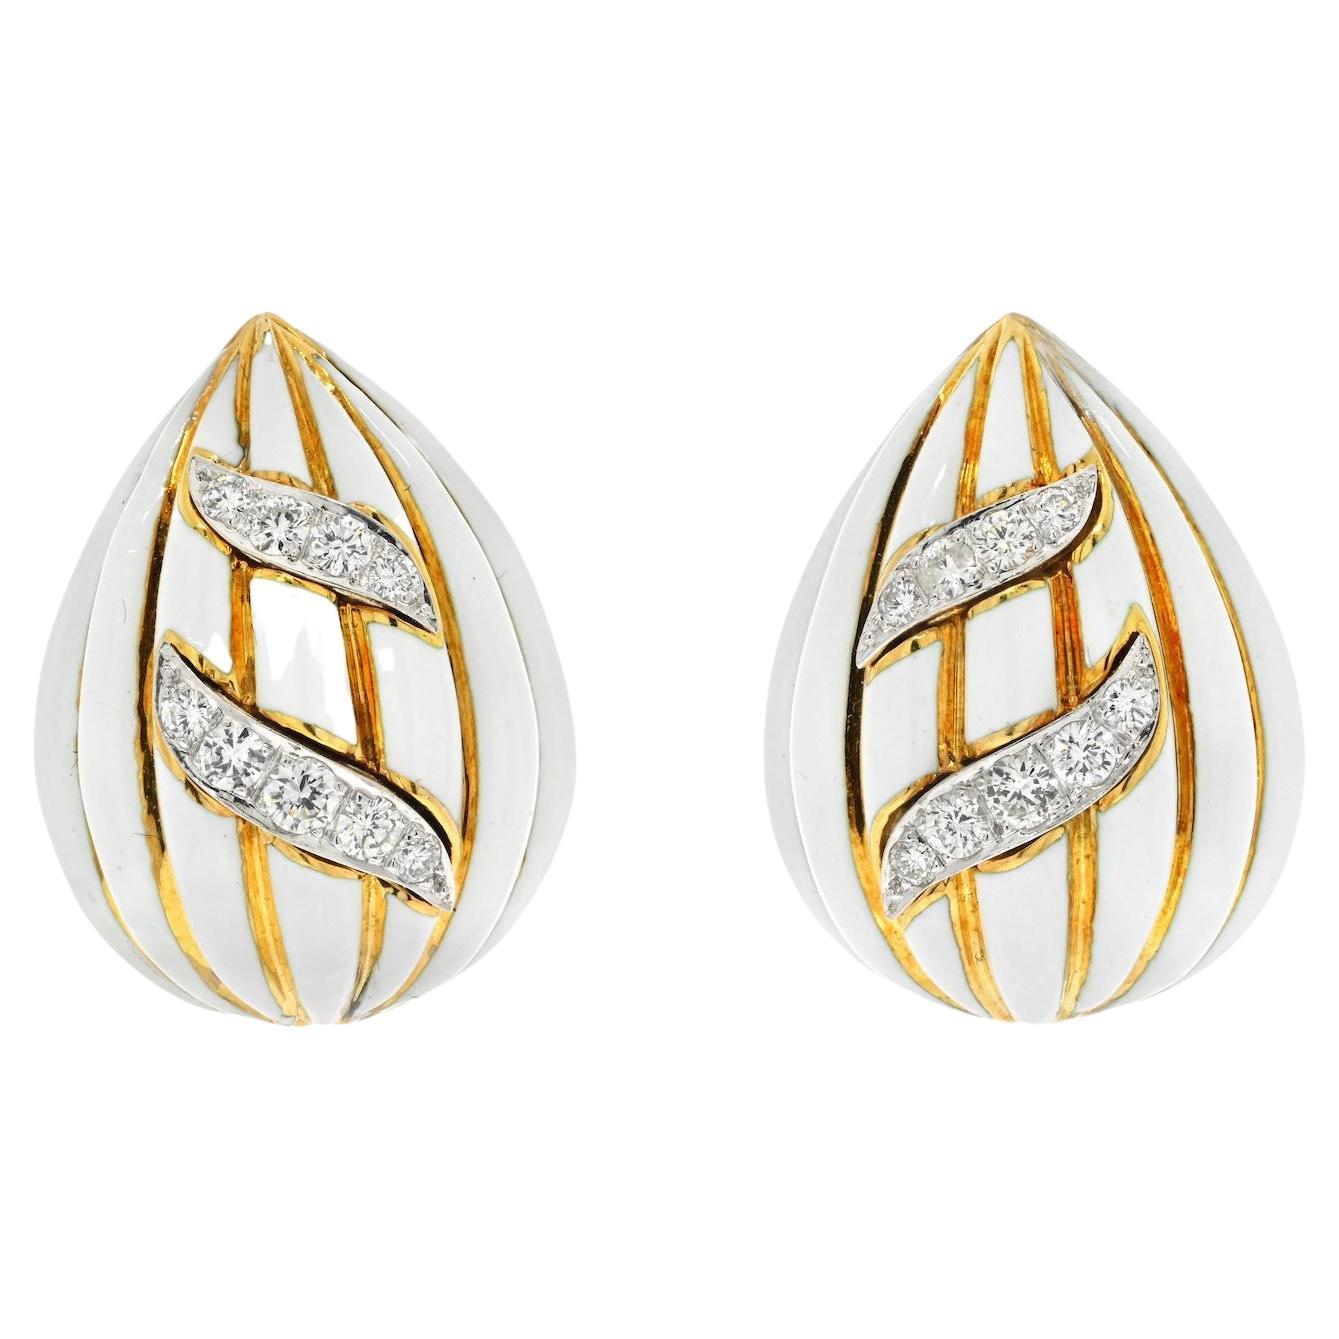 David Webb Fluted Almonds White Enamel And Diamond Earrings For Sale